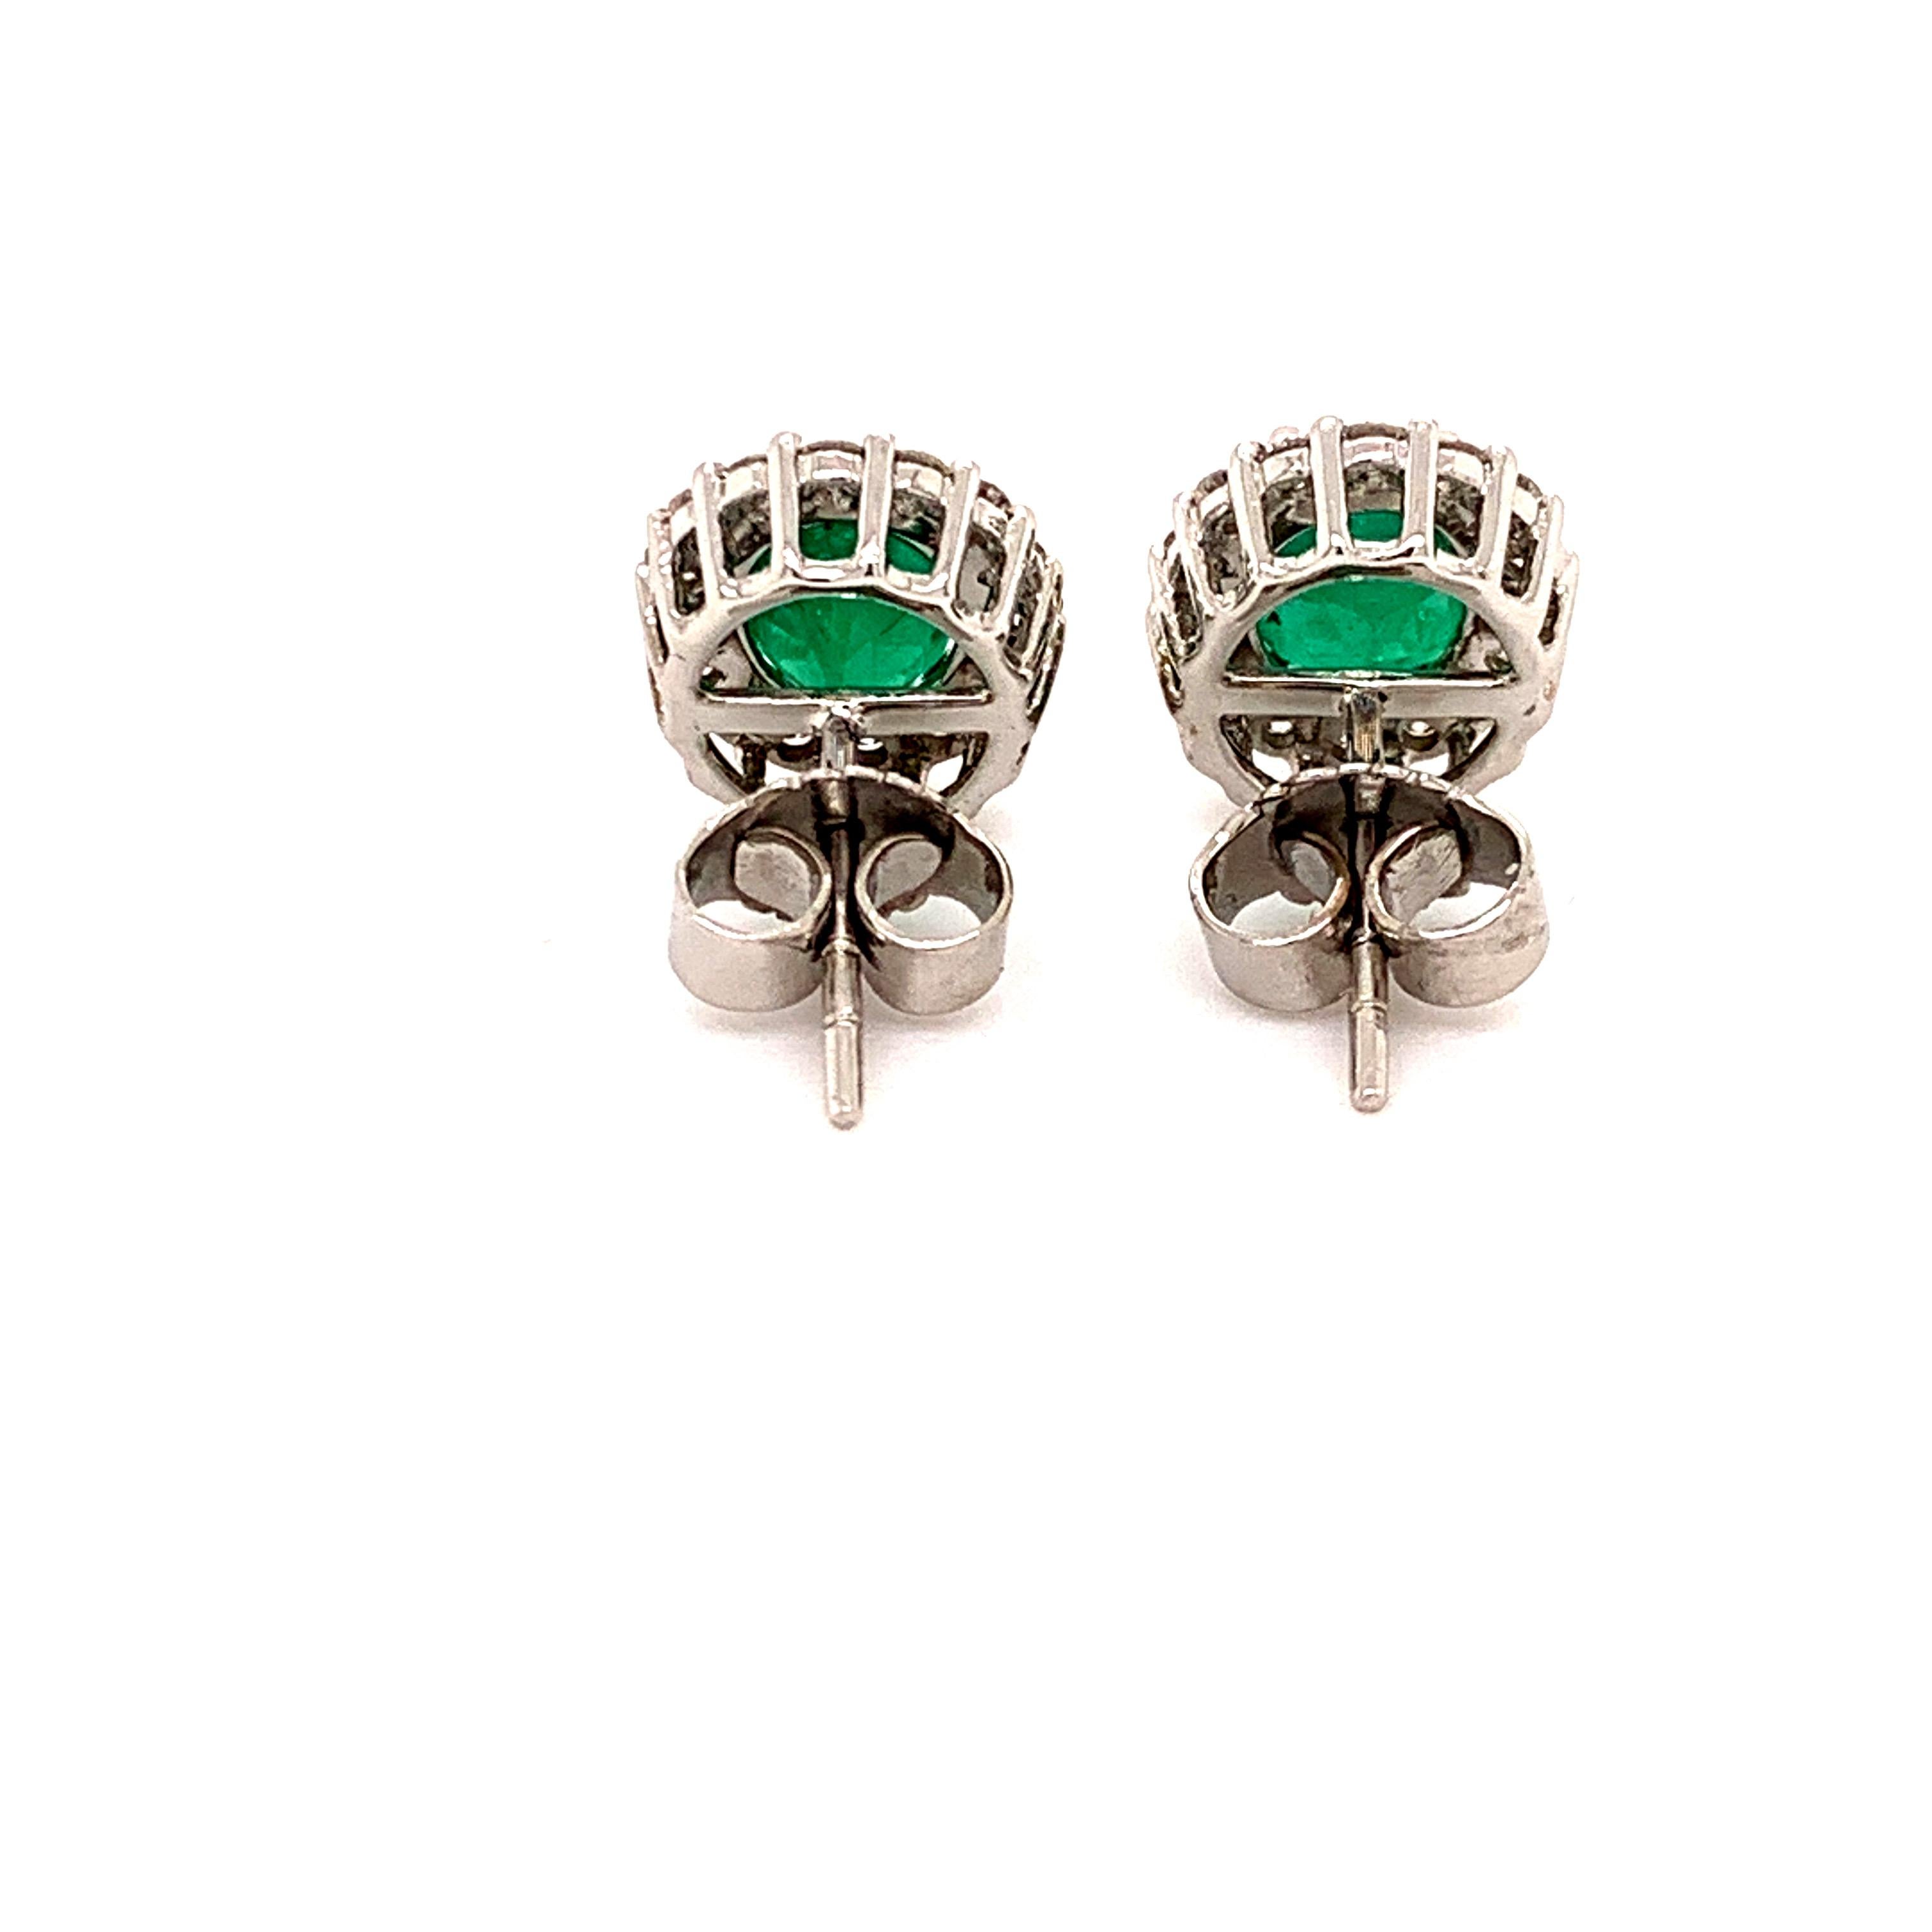 Oval Cut 37.73 Carat Emerald Necklace Earrings Set